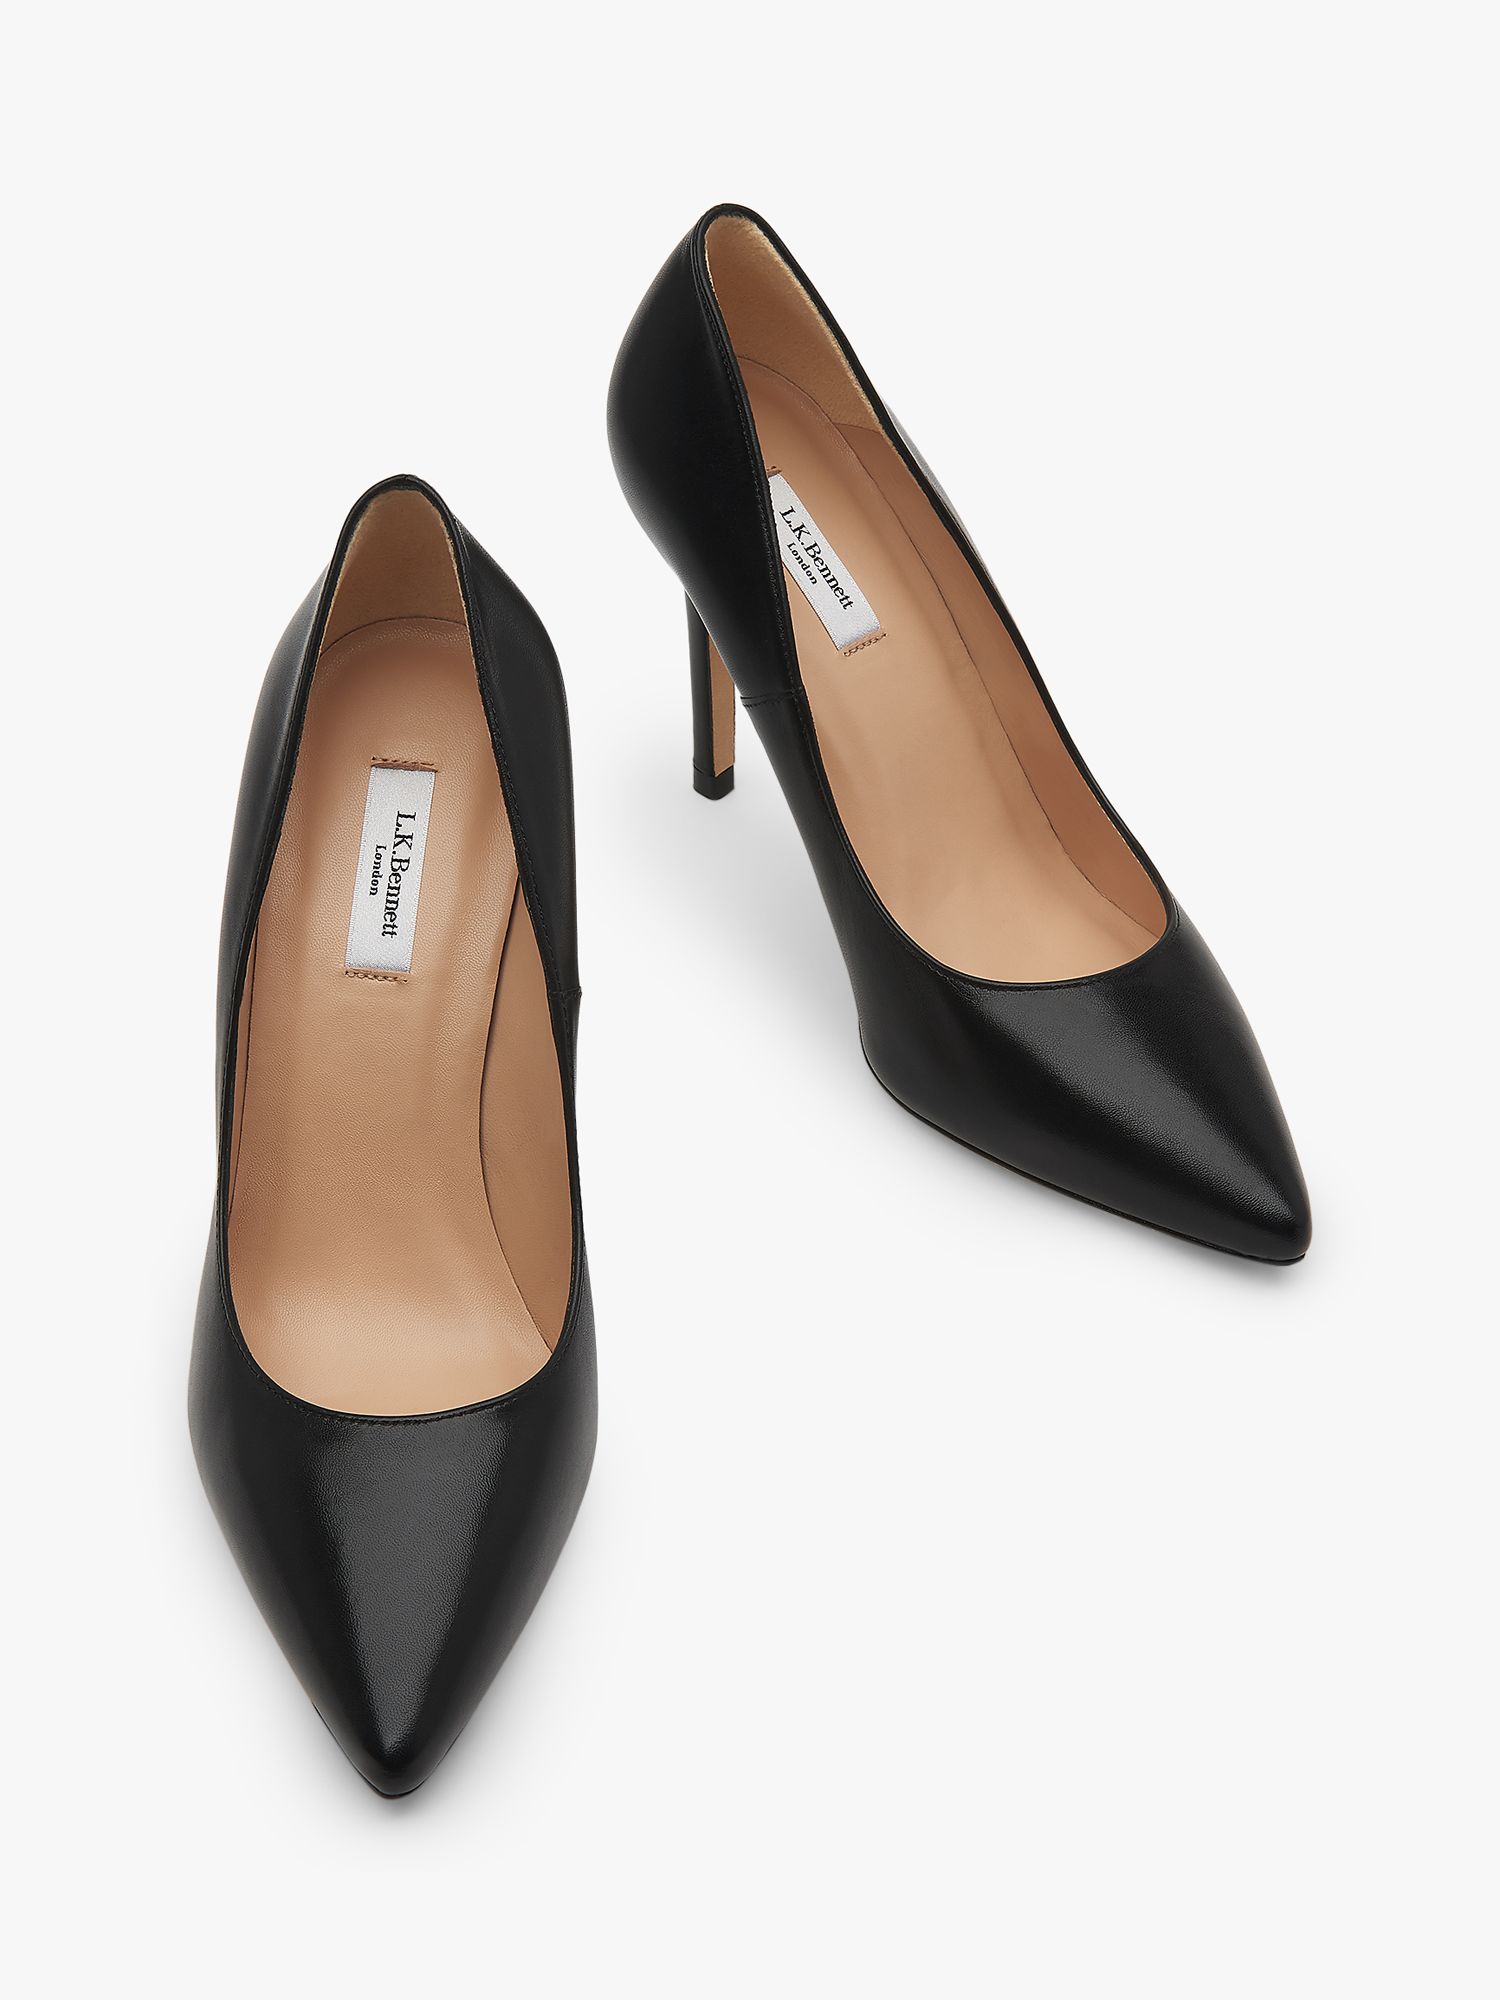 L.K.Bennett Fern Pointed Toe Leather Court Shoes, Black, 2